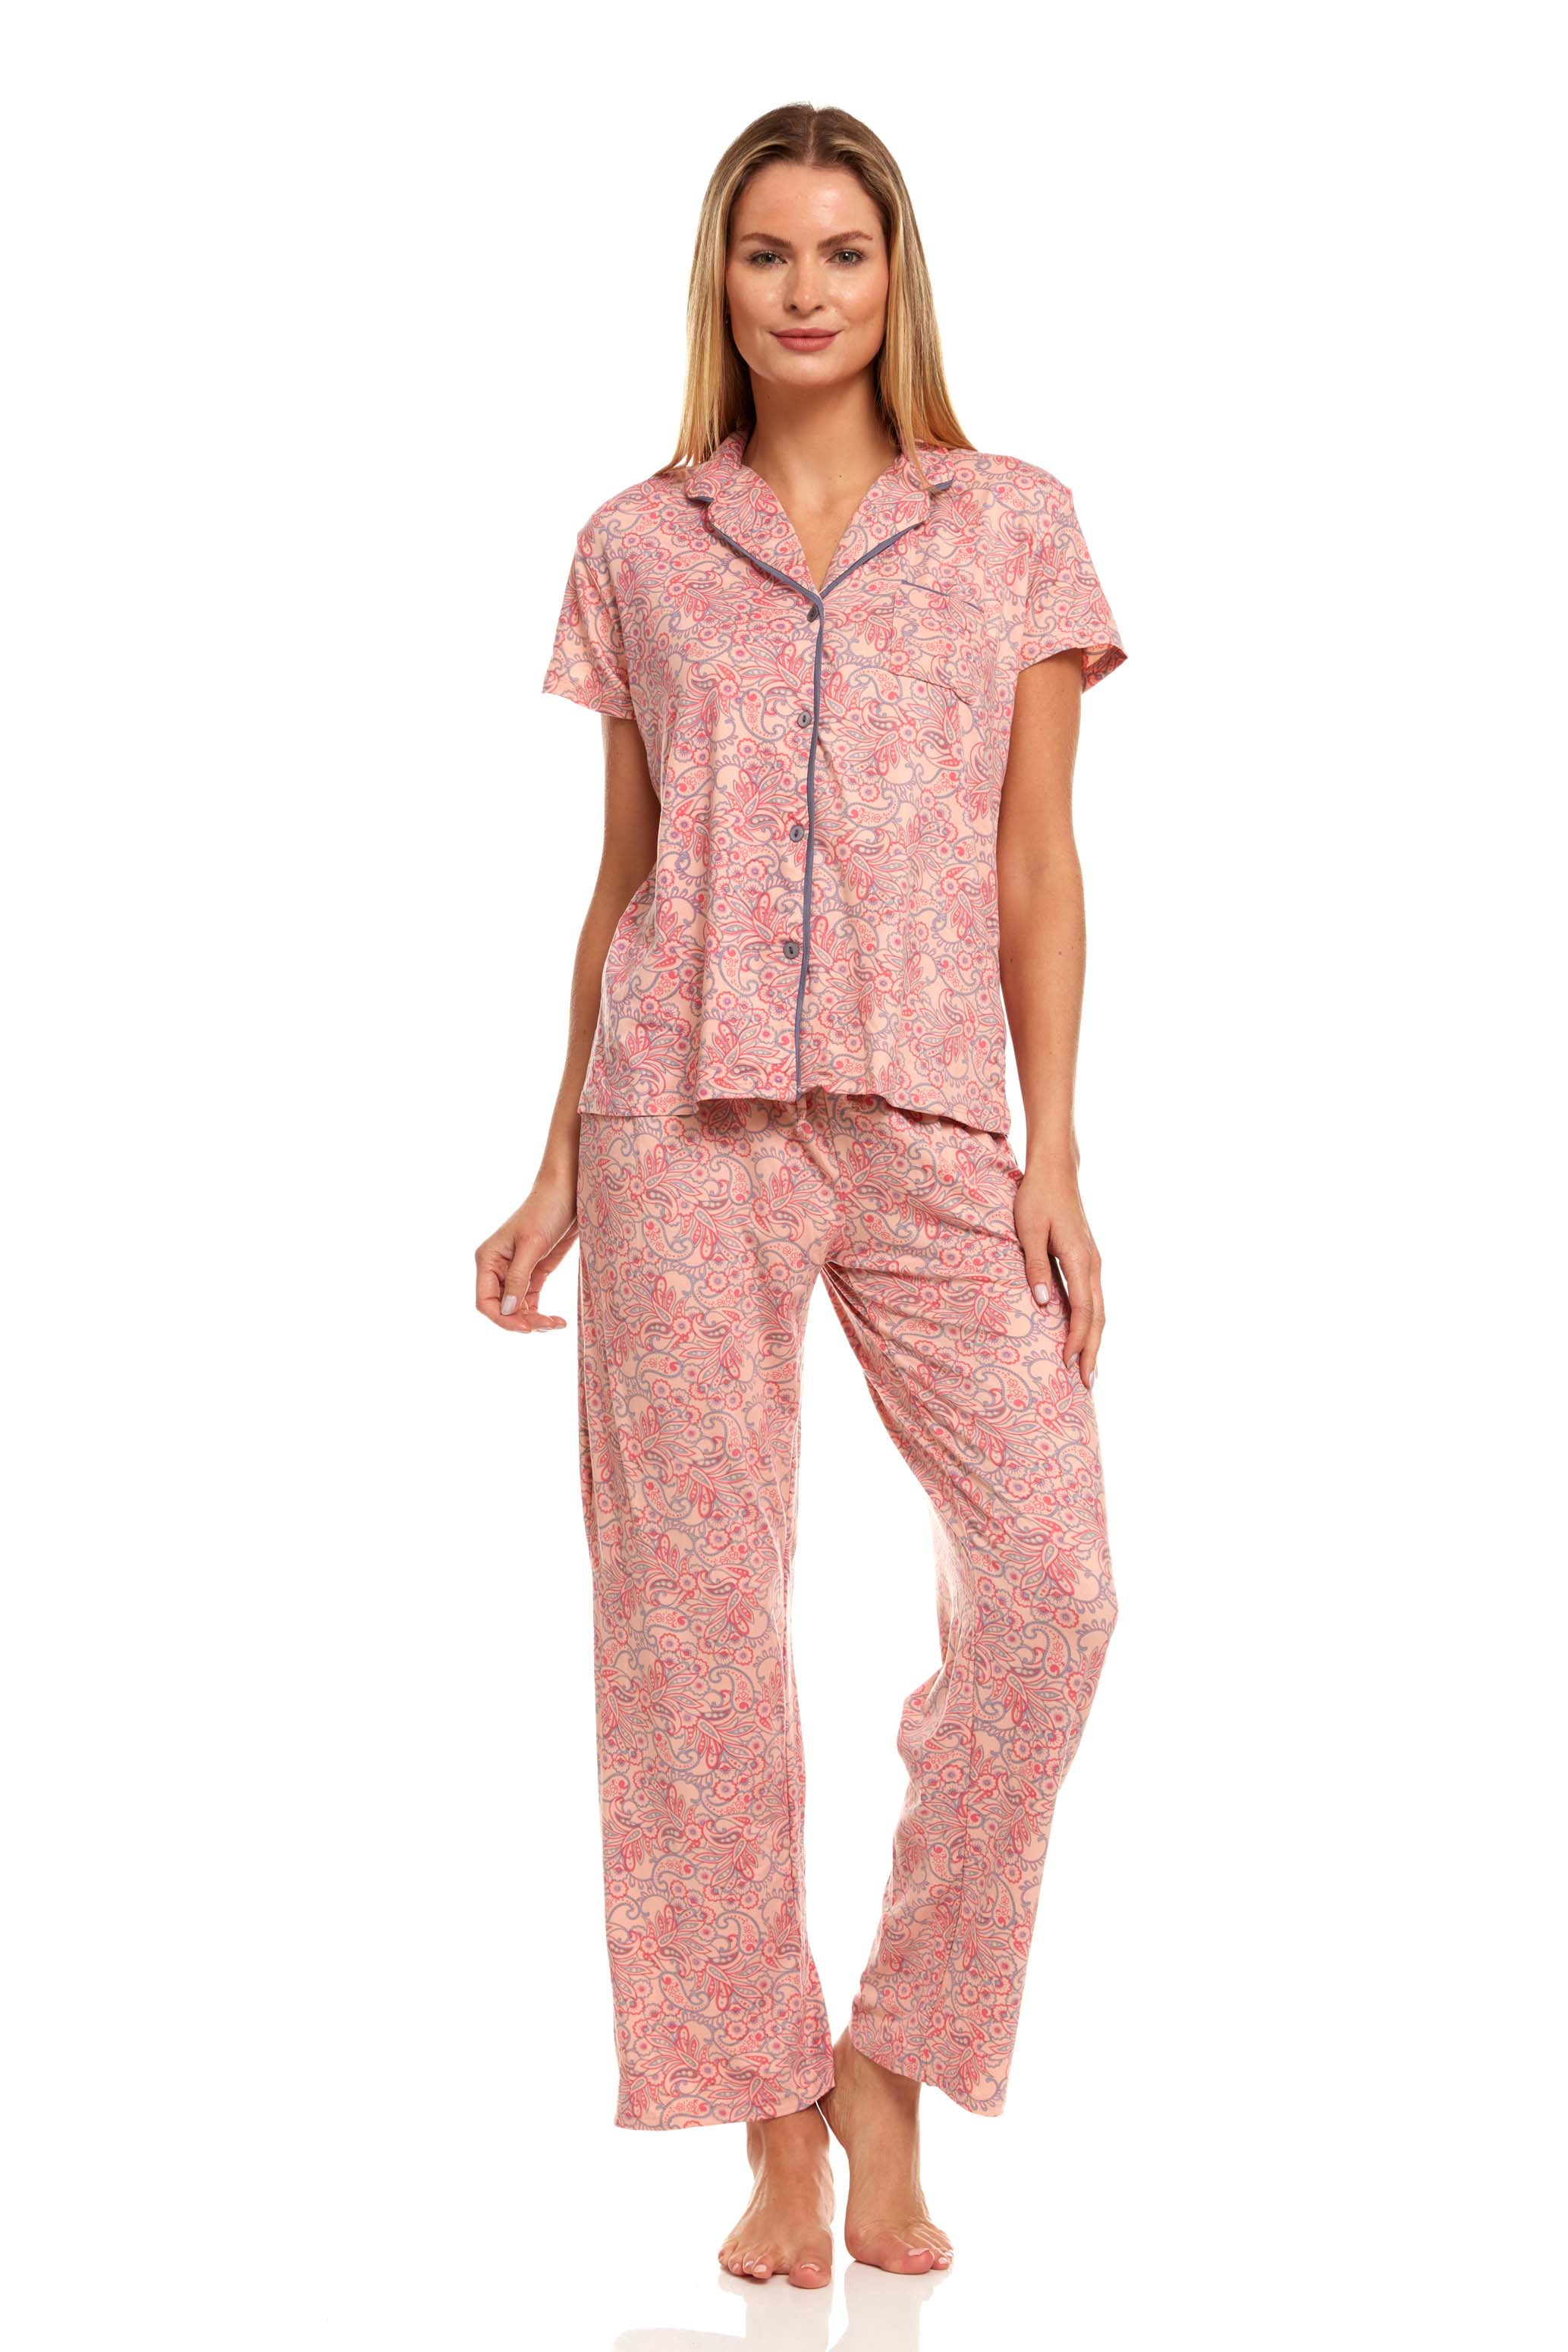 Womens Sleepwear Pajamas Set Woman Short Sleeve Button Down set ...